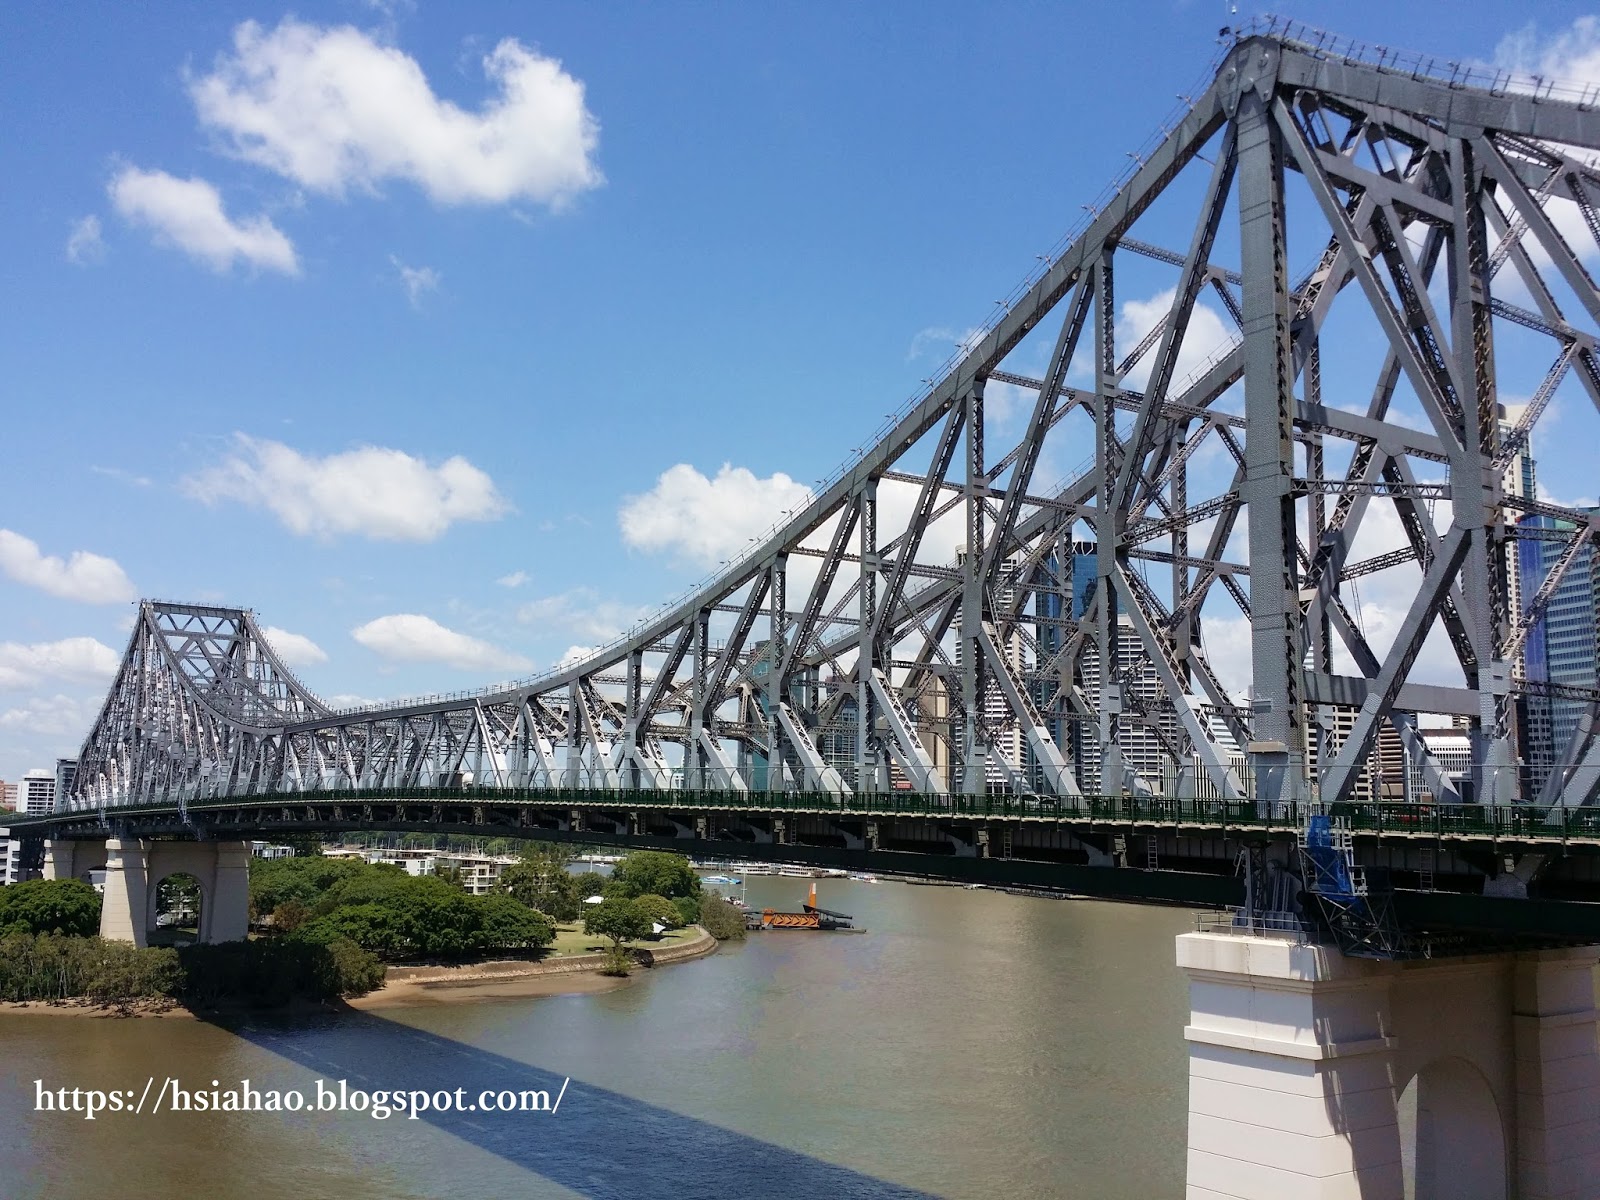 Brisbane-attraction-tourist-spot-Story-Bridge-climb-price-restaurant-dining-travel-Australia